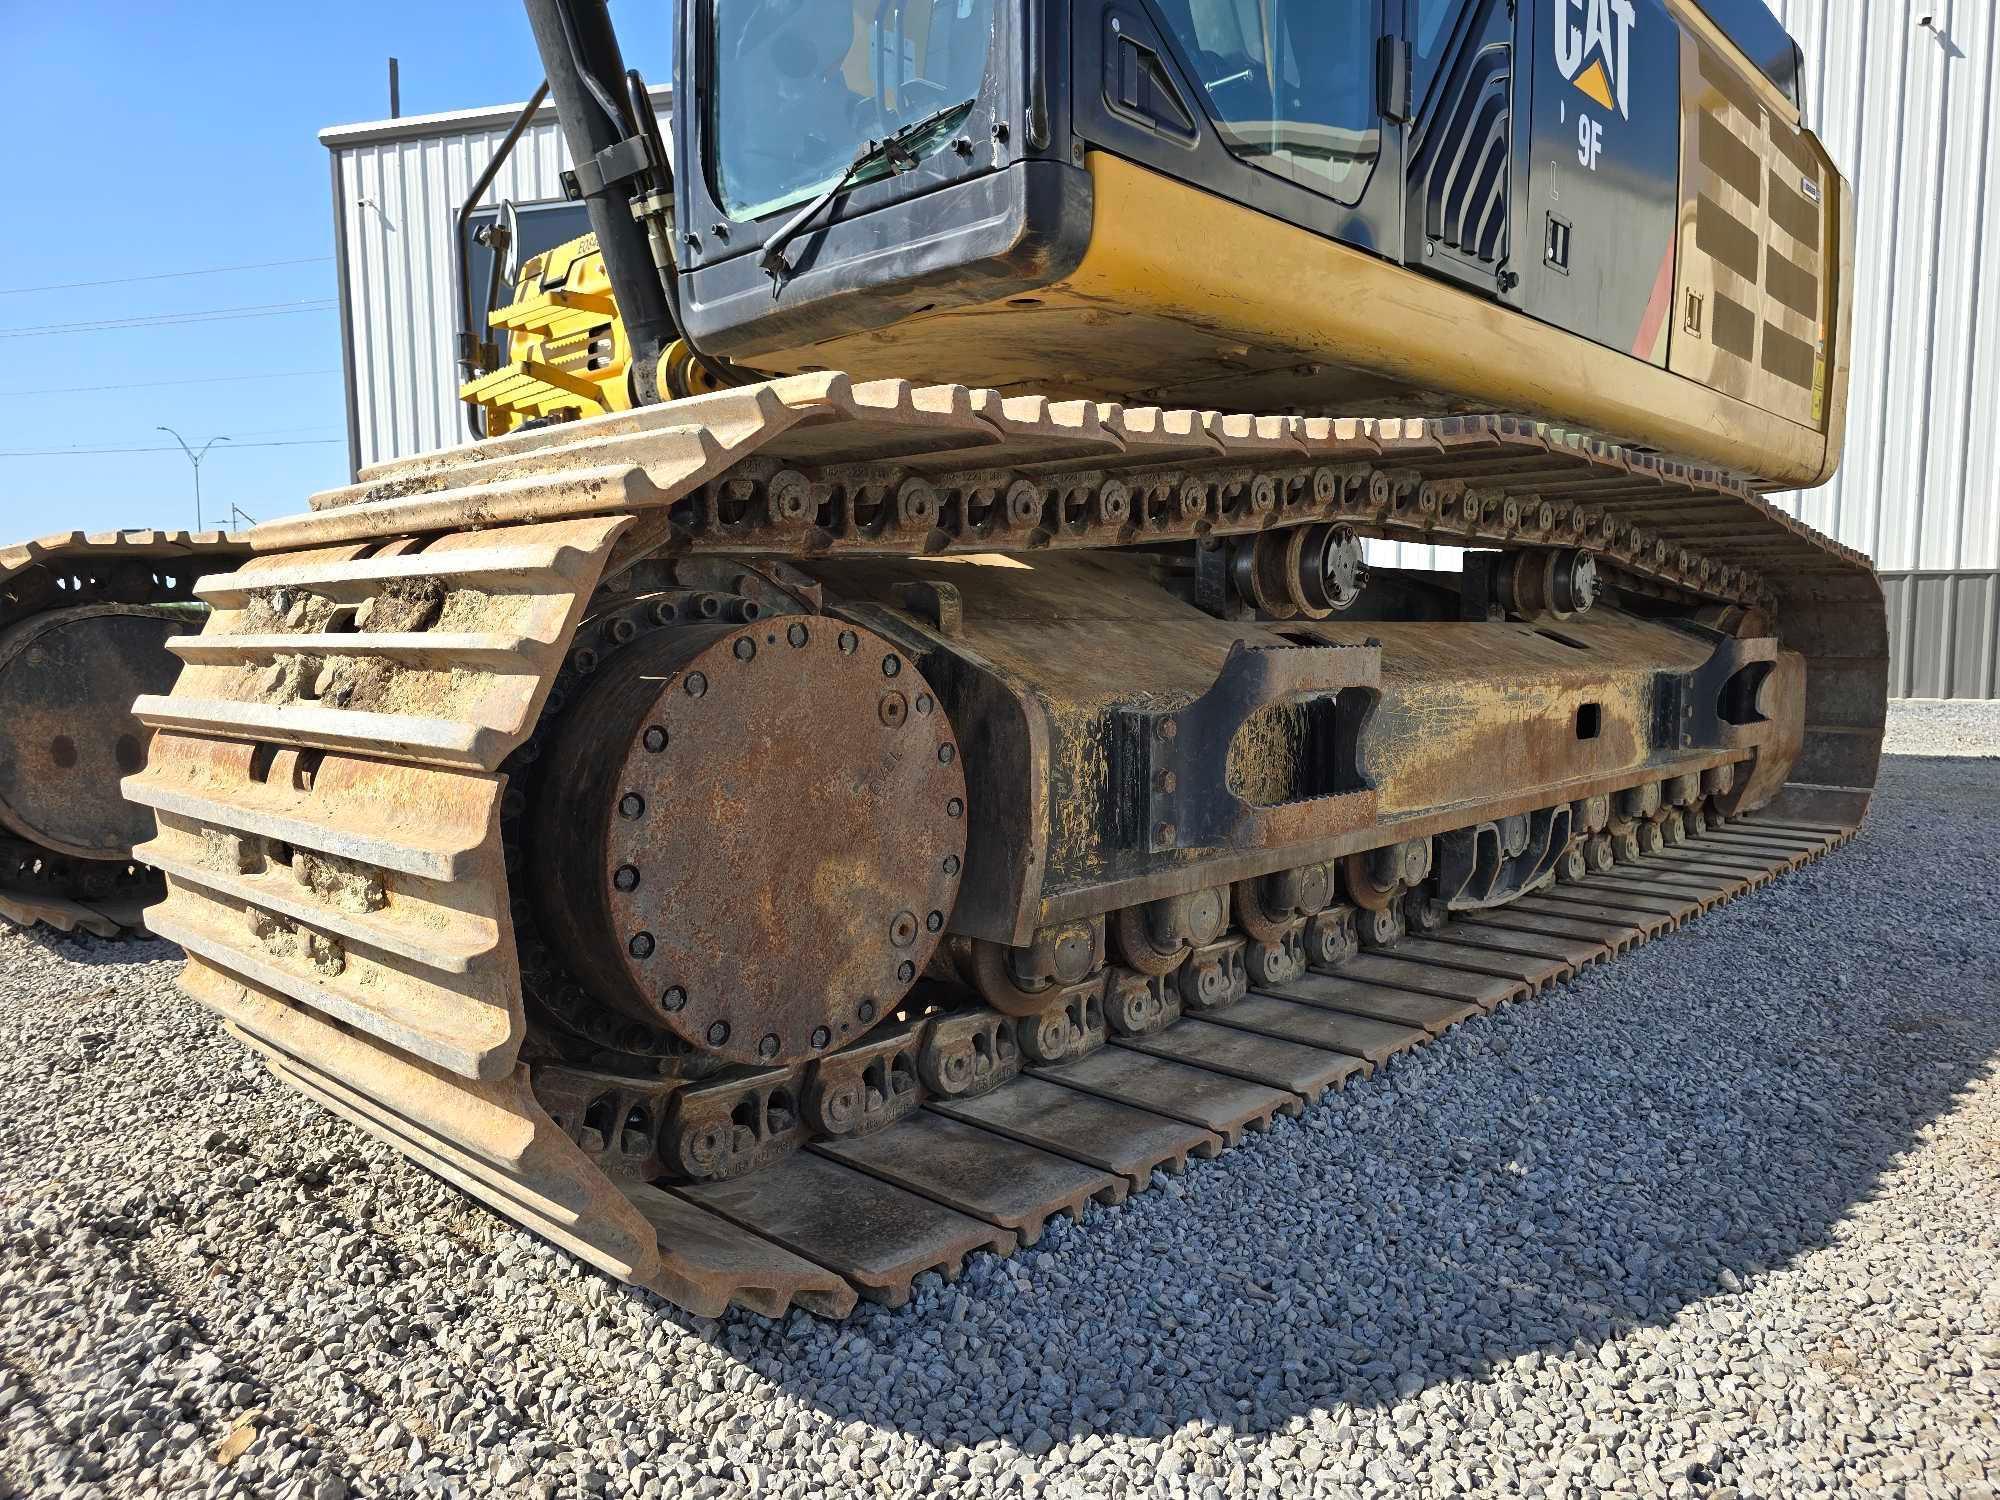 2017 Caterpillar 349FL Hydraulic Excavator